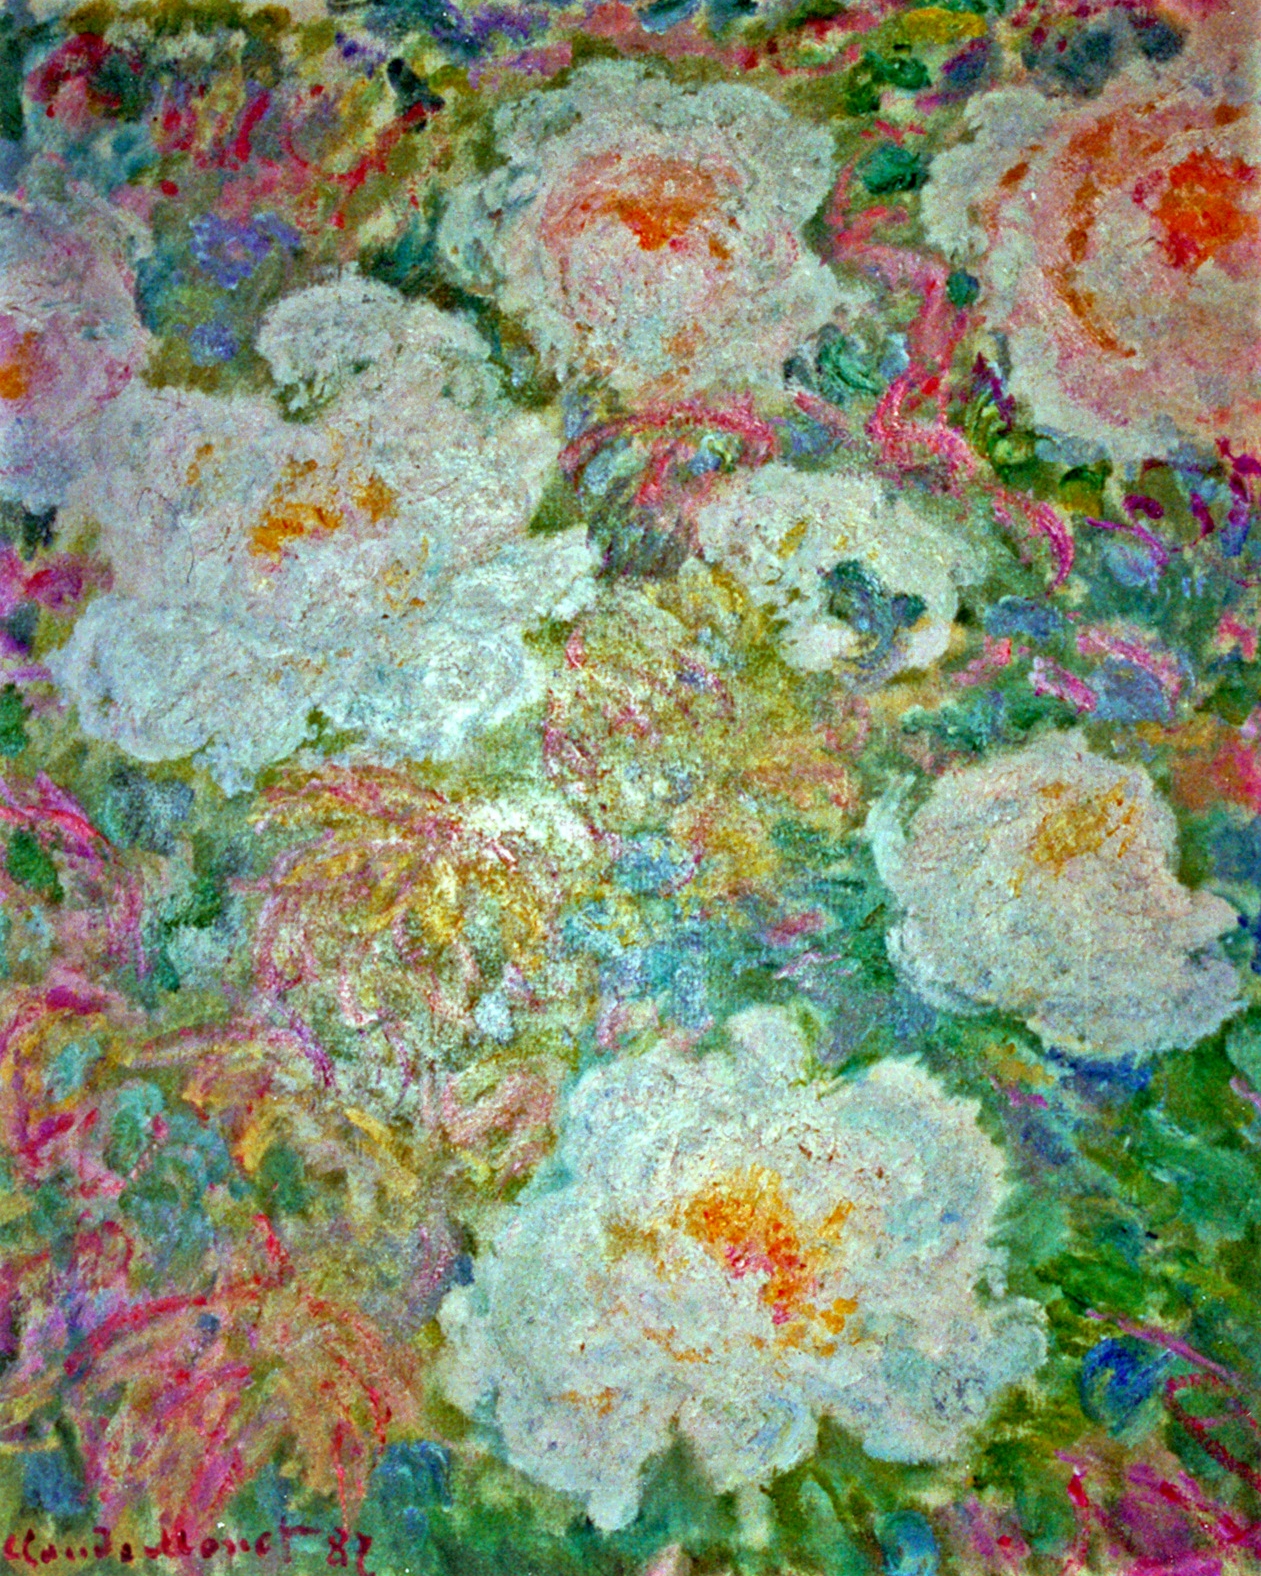 Claude+Monet-1840-1926 (146).jpg